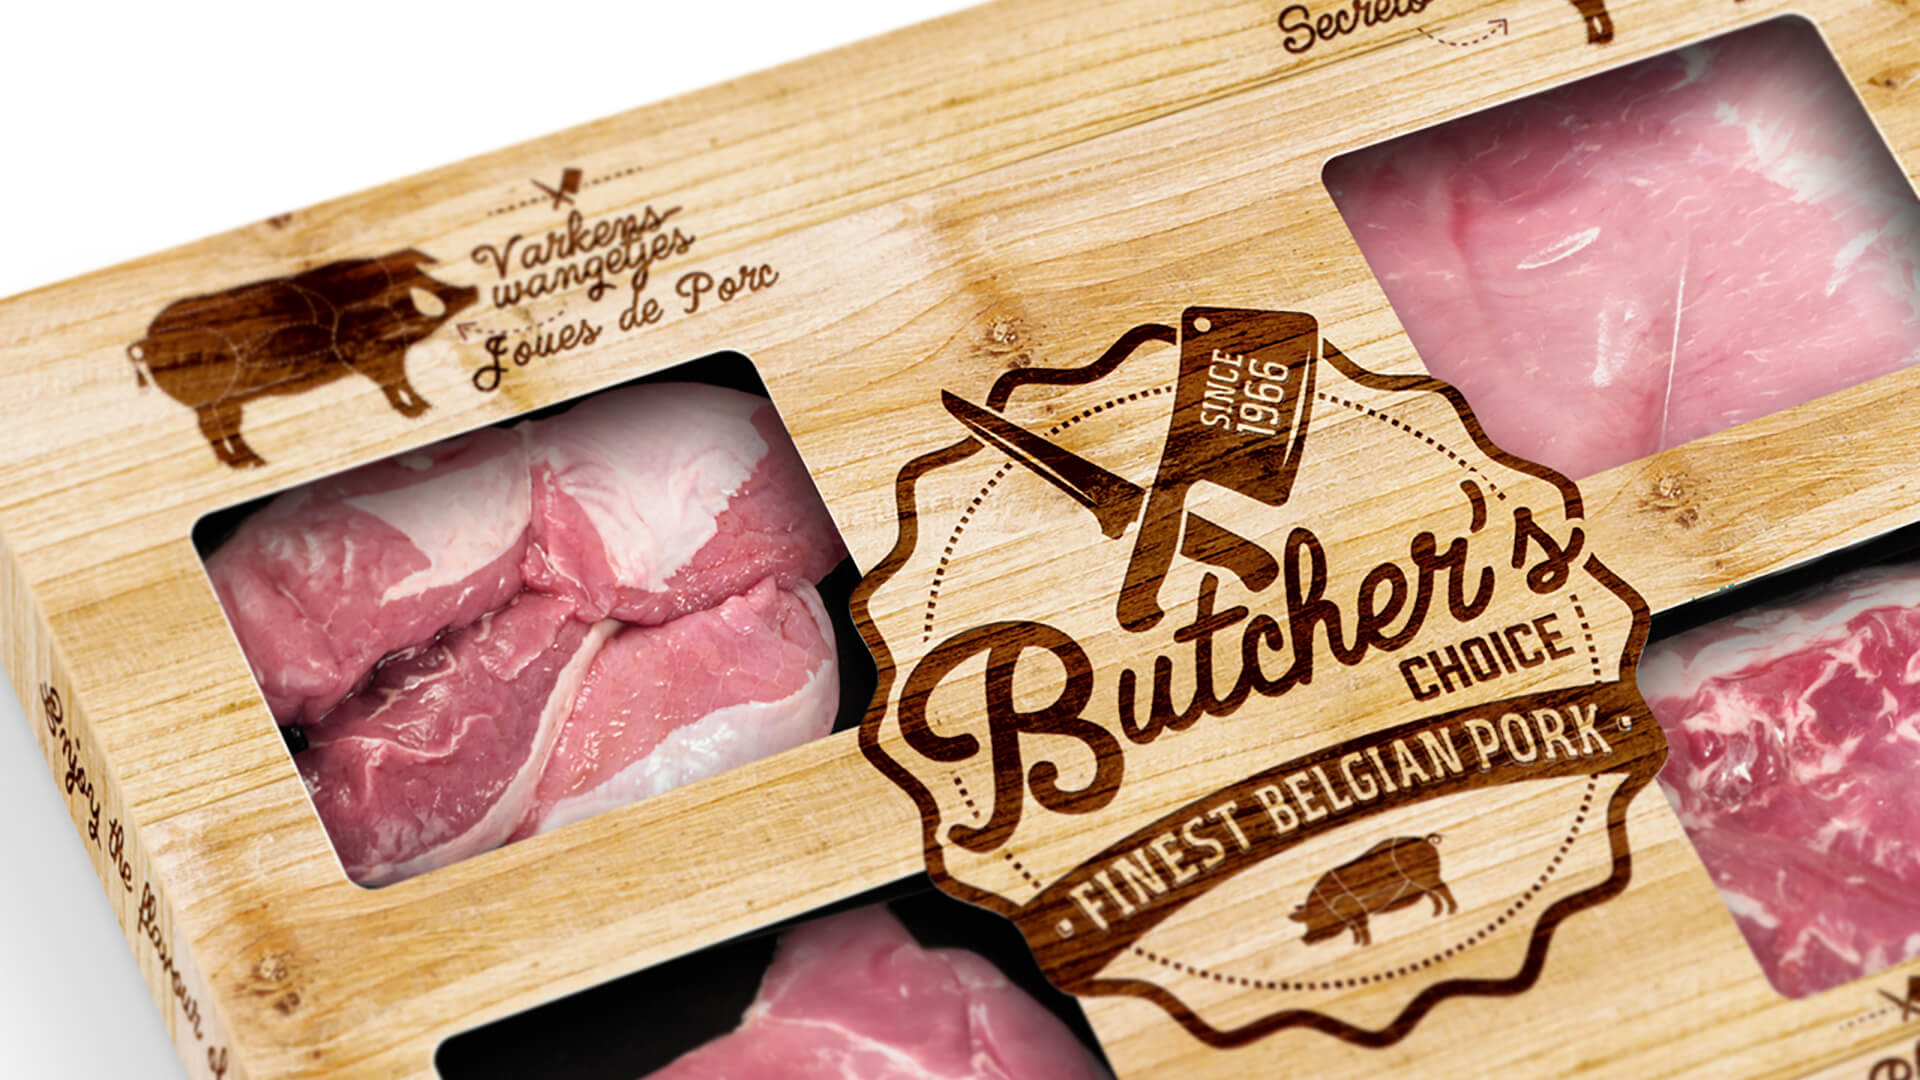 graphic design vensterverpakking butcher's choice